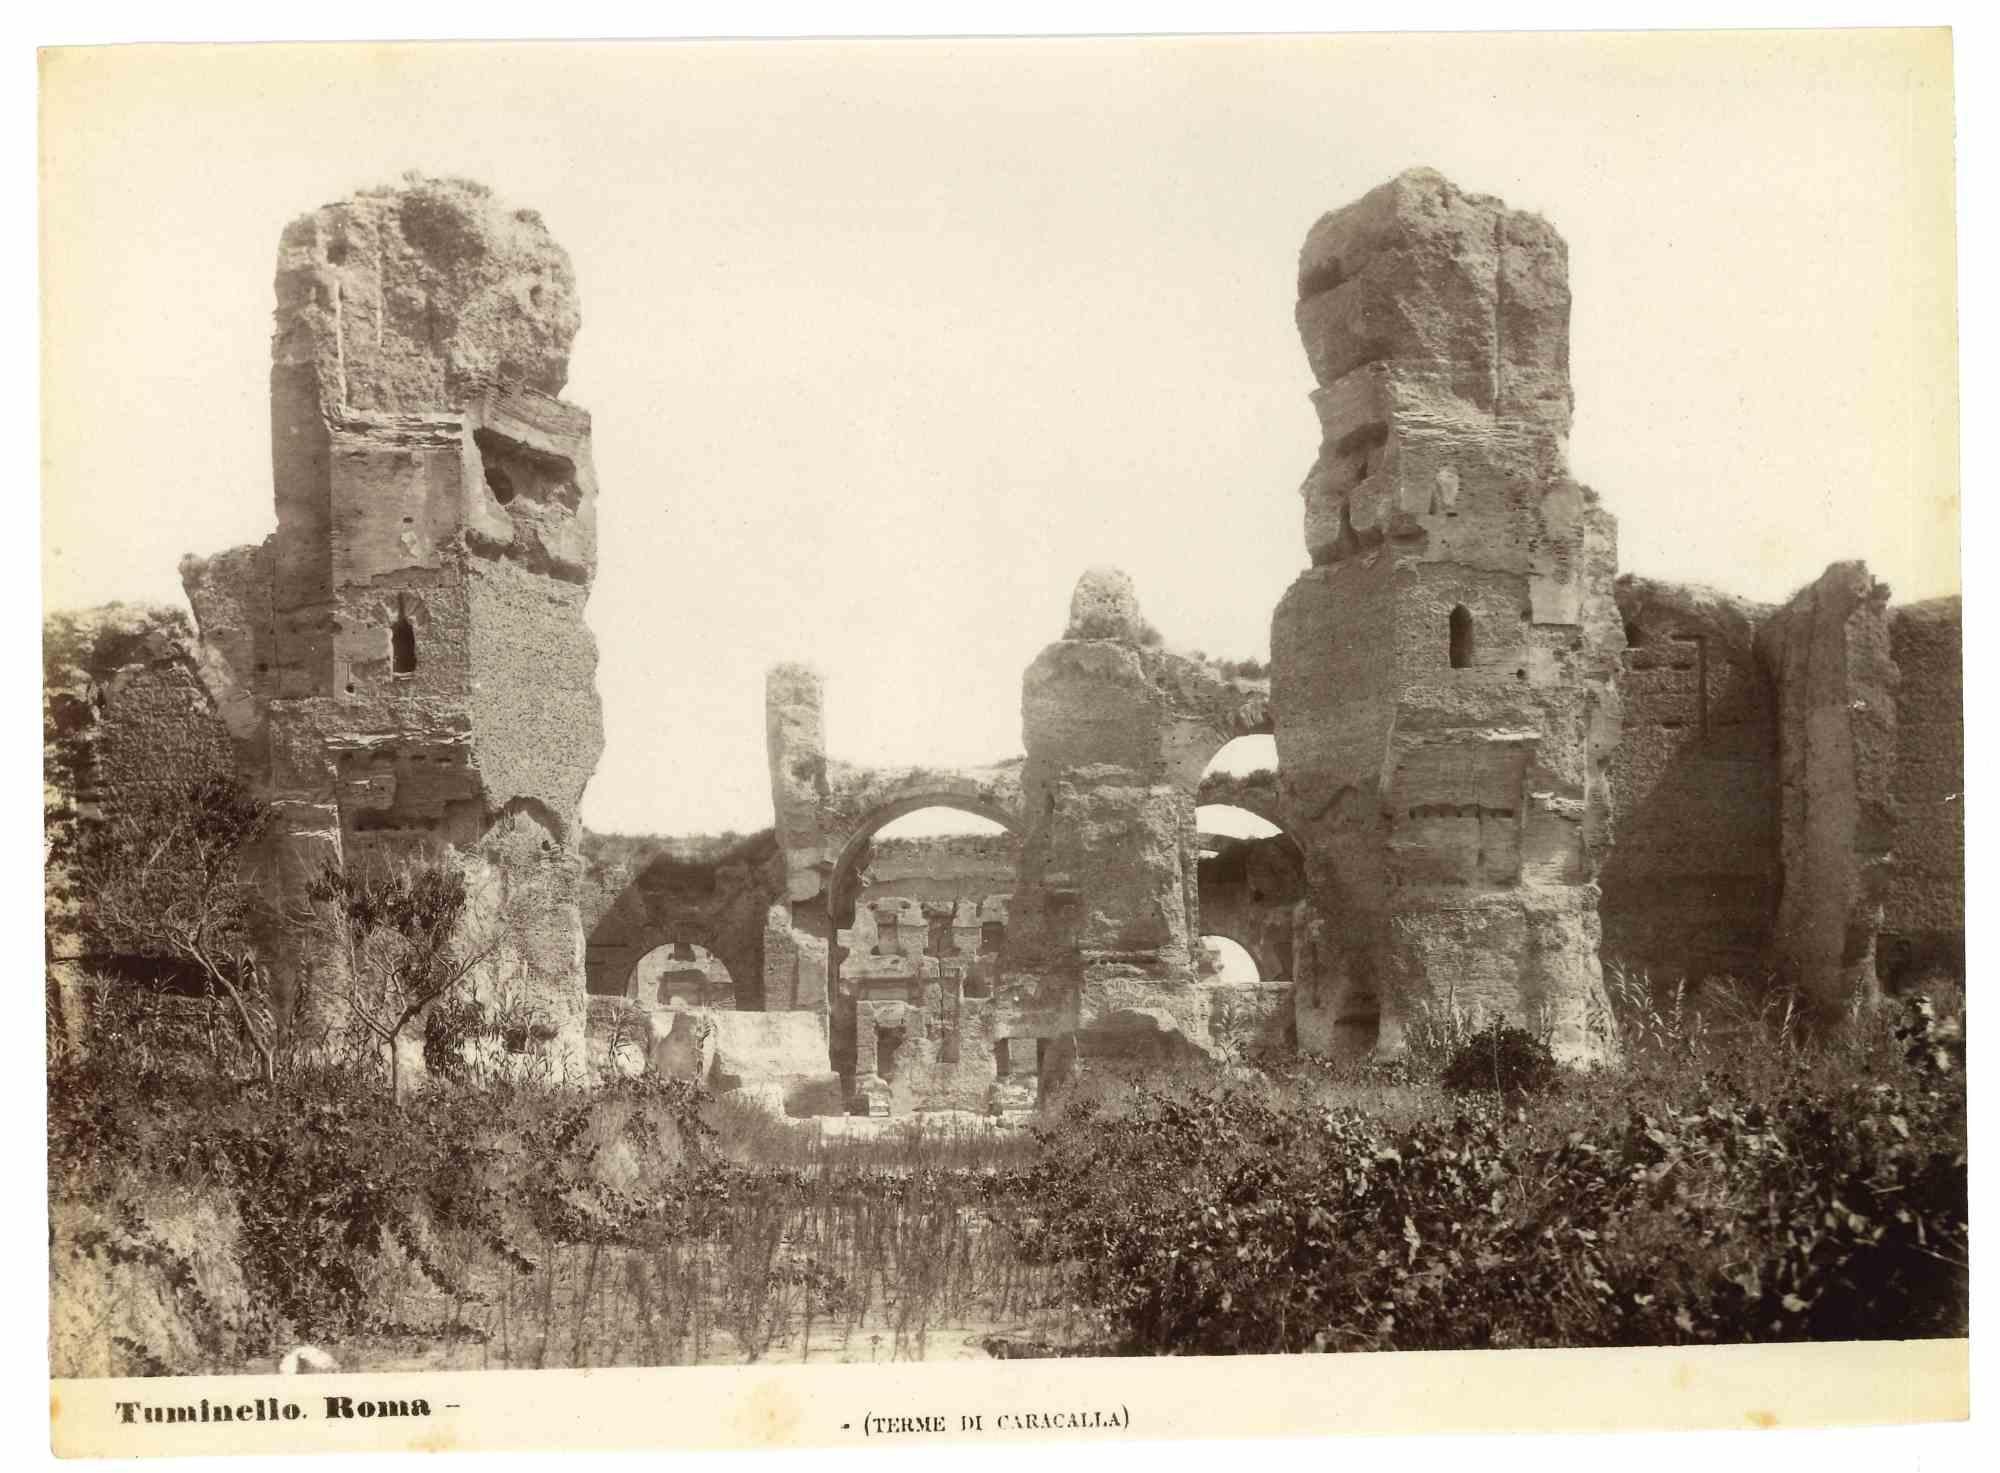 Baths of Caracalla - Vintage Photograph - Early 20th Century